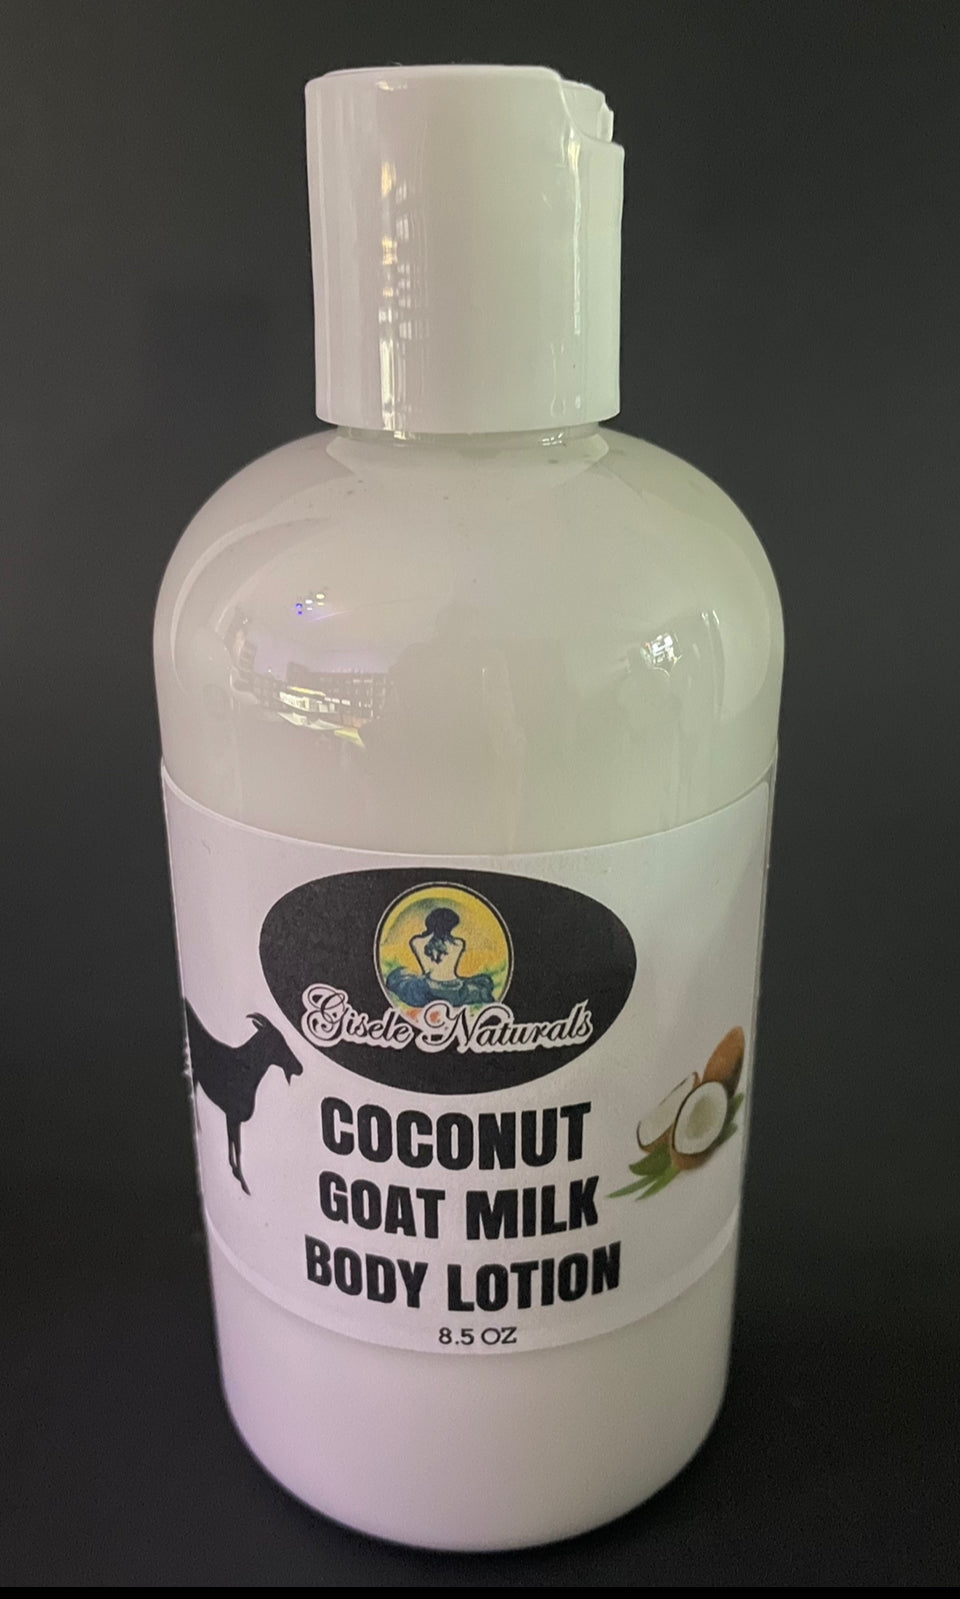 Coconut goats milk body lotion